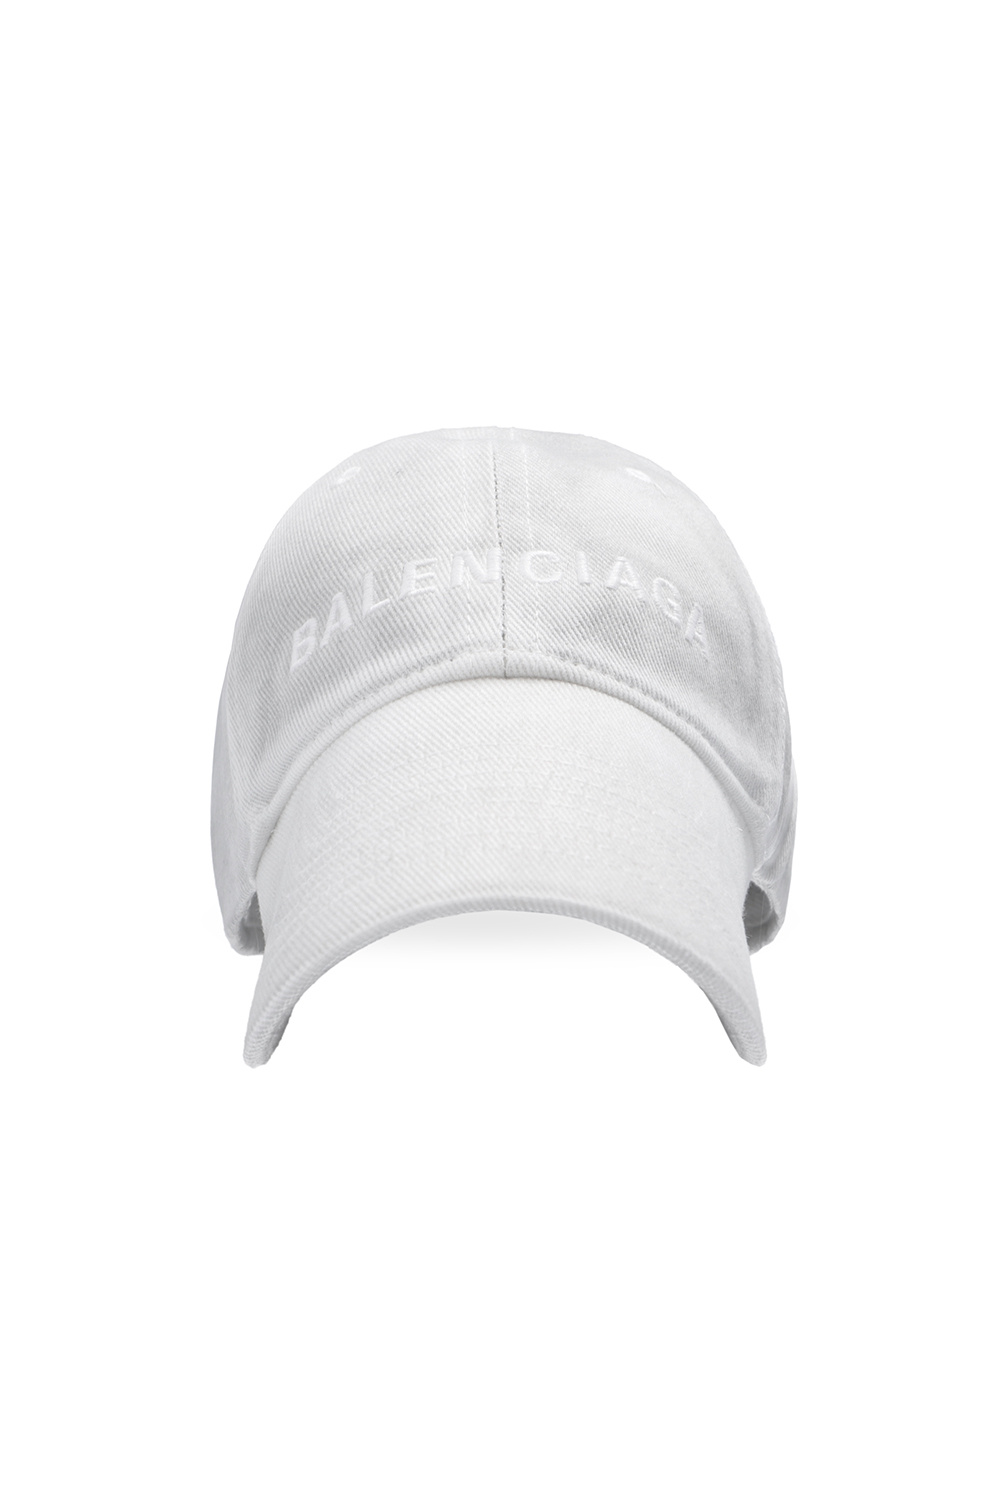 Balenciaga Political Campaign Hat